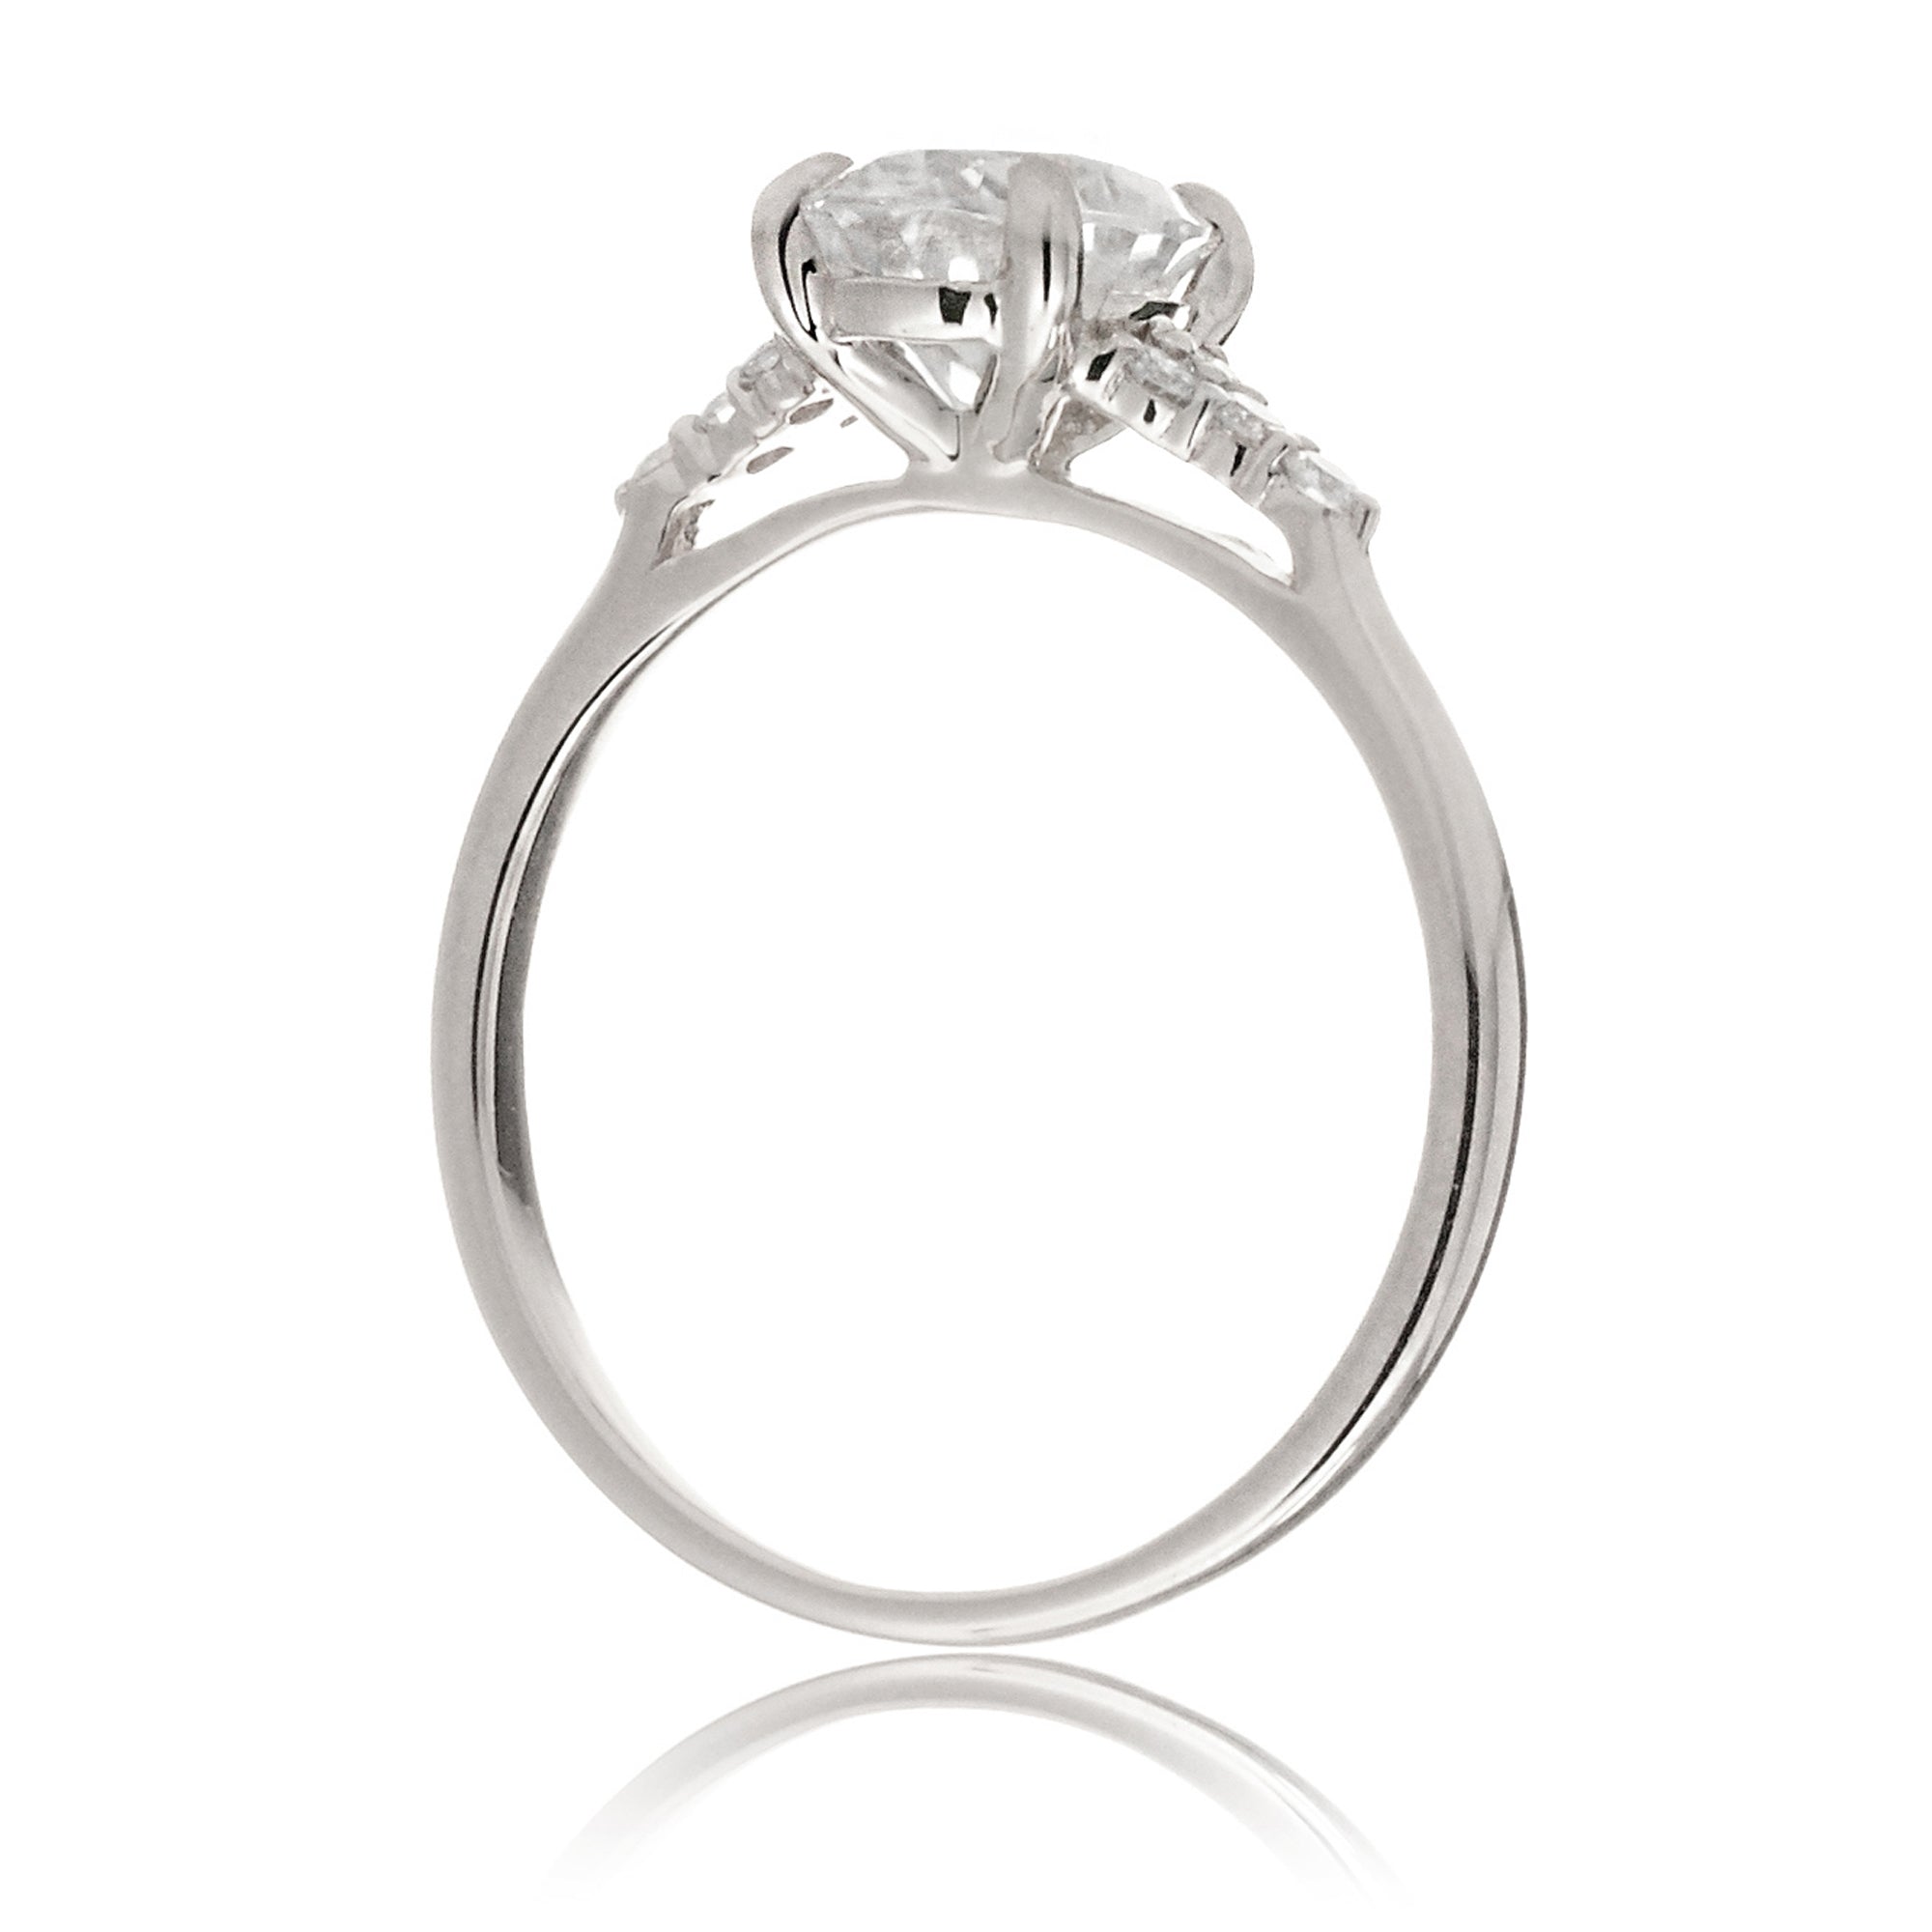 The Chloe Princess Cut Diamond Ring (Lab-Grown)